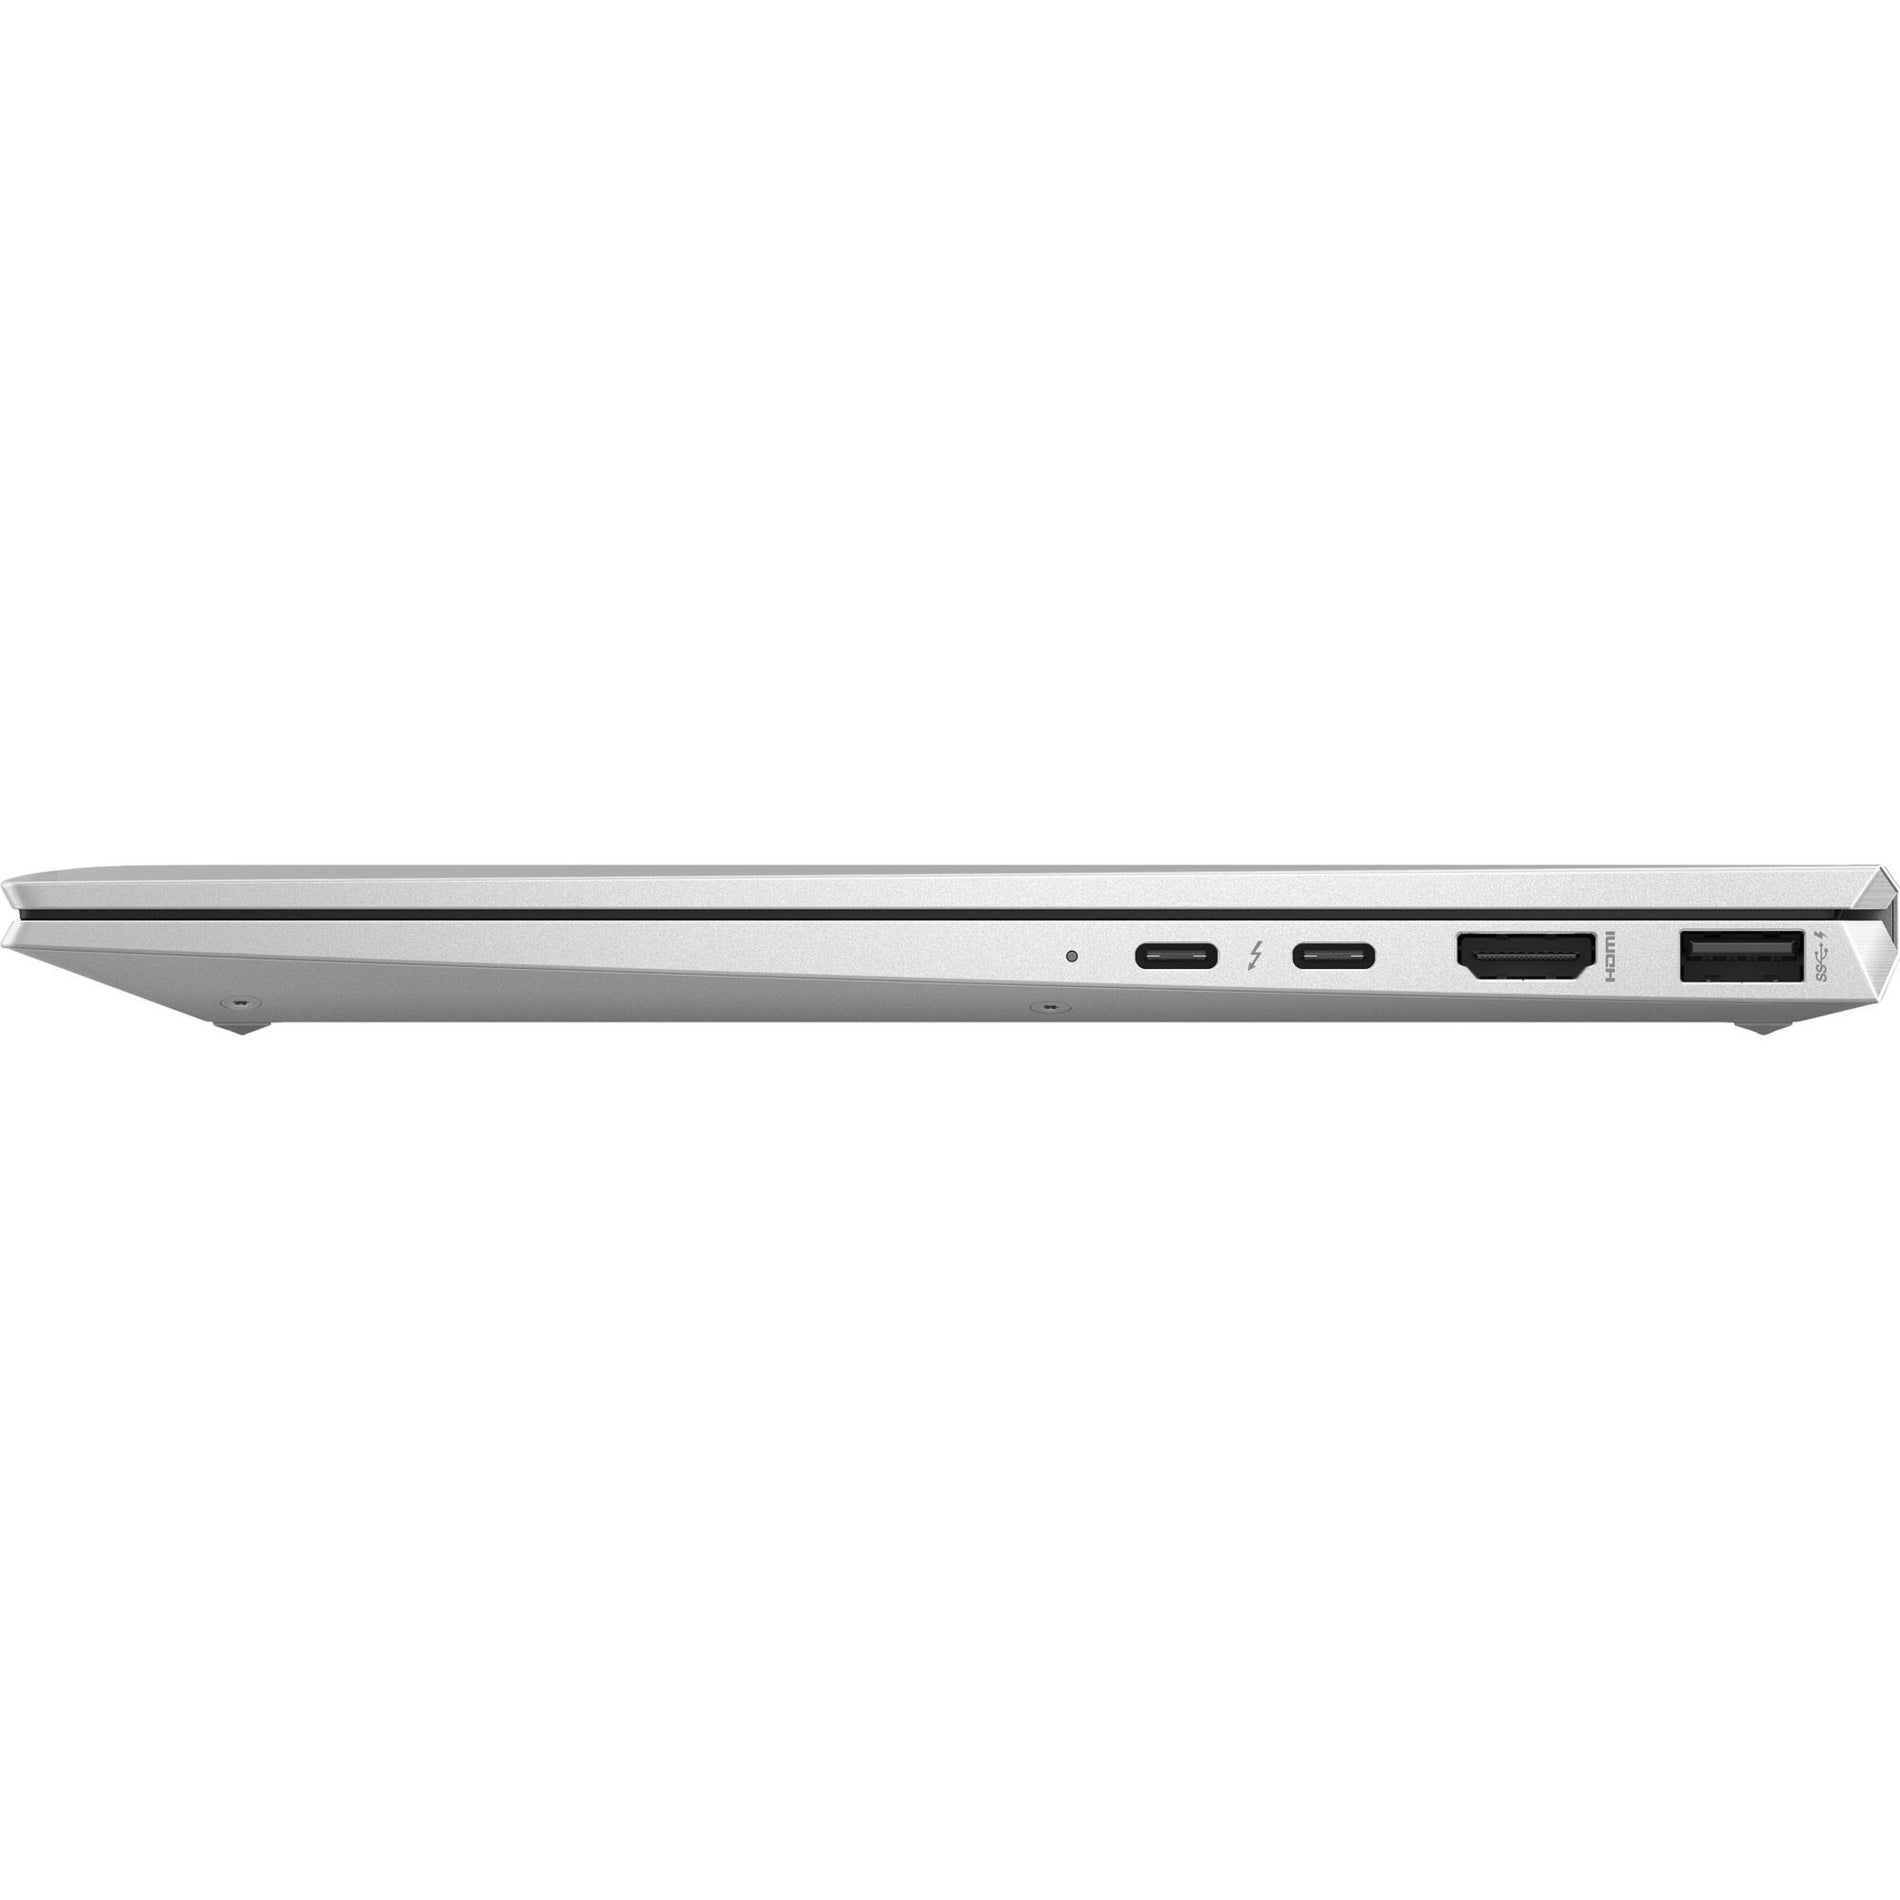 HP EliteBook x360 1030 G8 13.3" 2 in 1 Notebook, Intel EVO Core i7, 16GB RAM, 256GB SSD, Windows 10 Pro